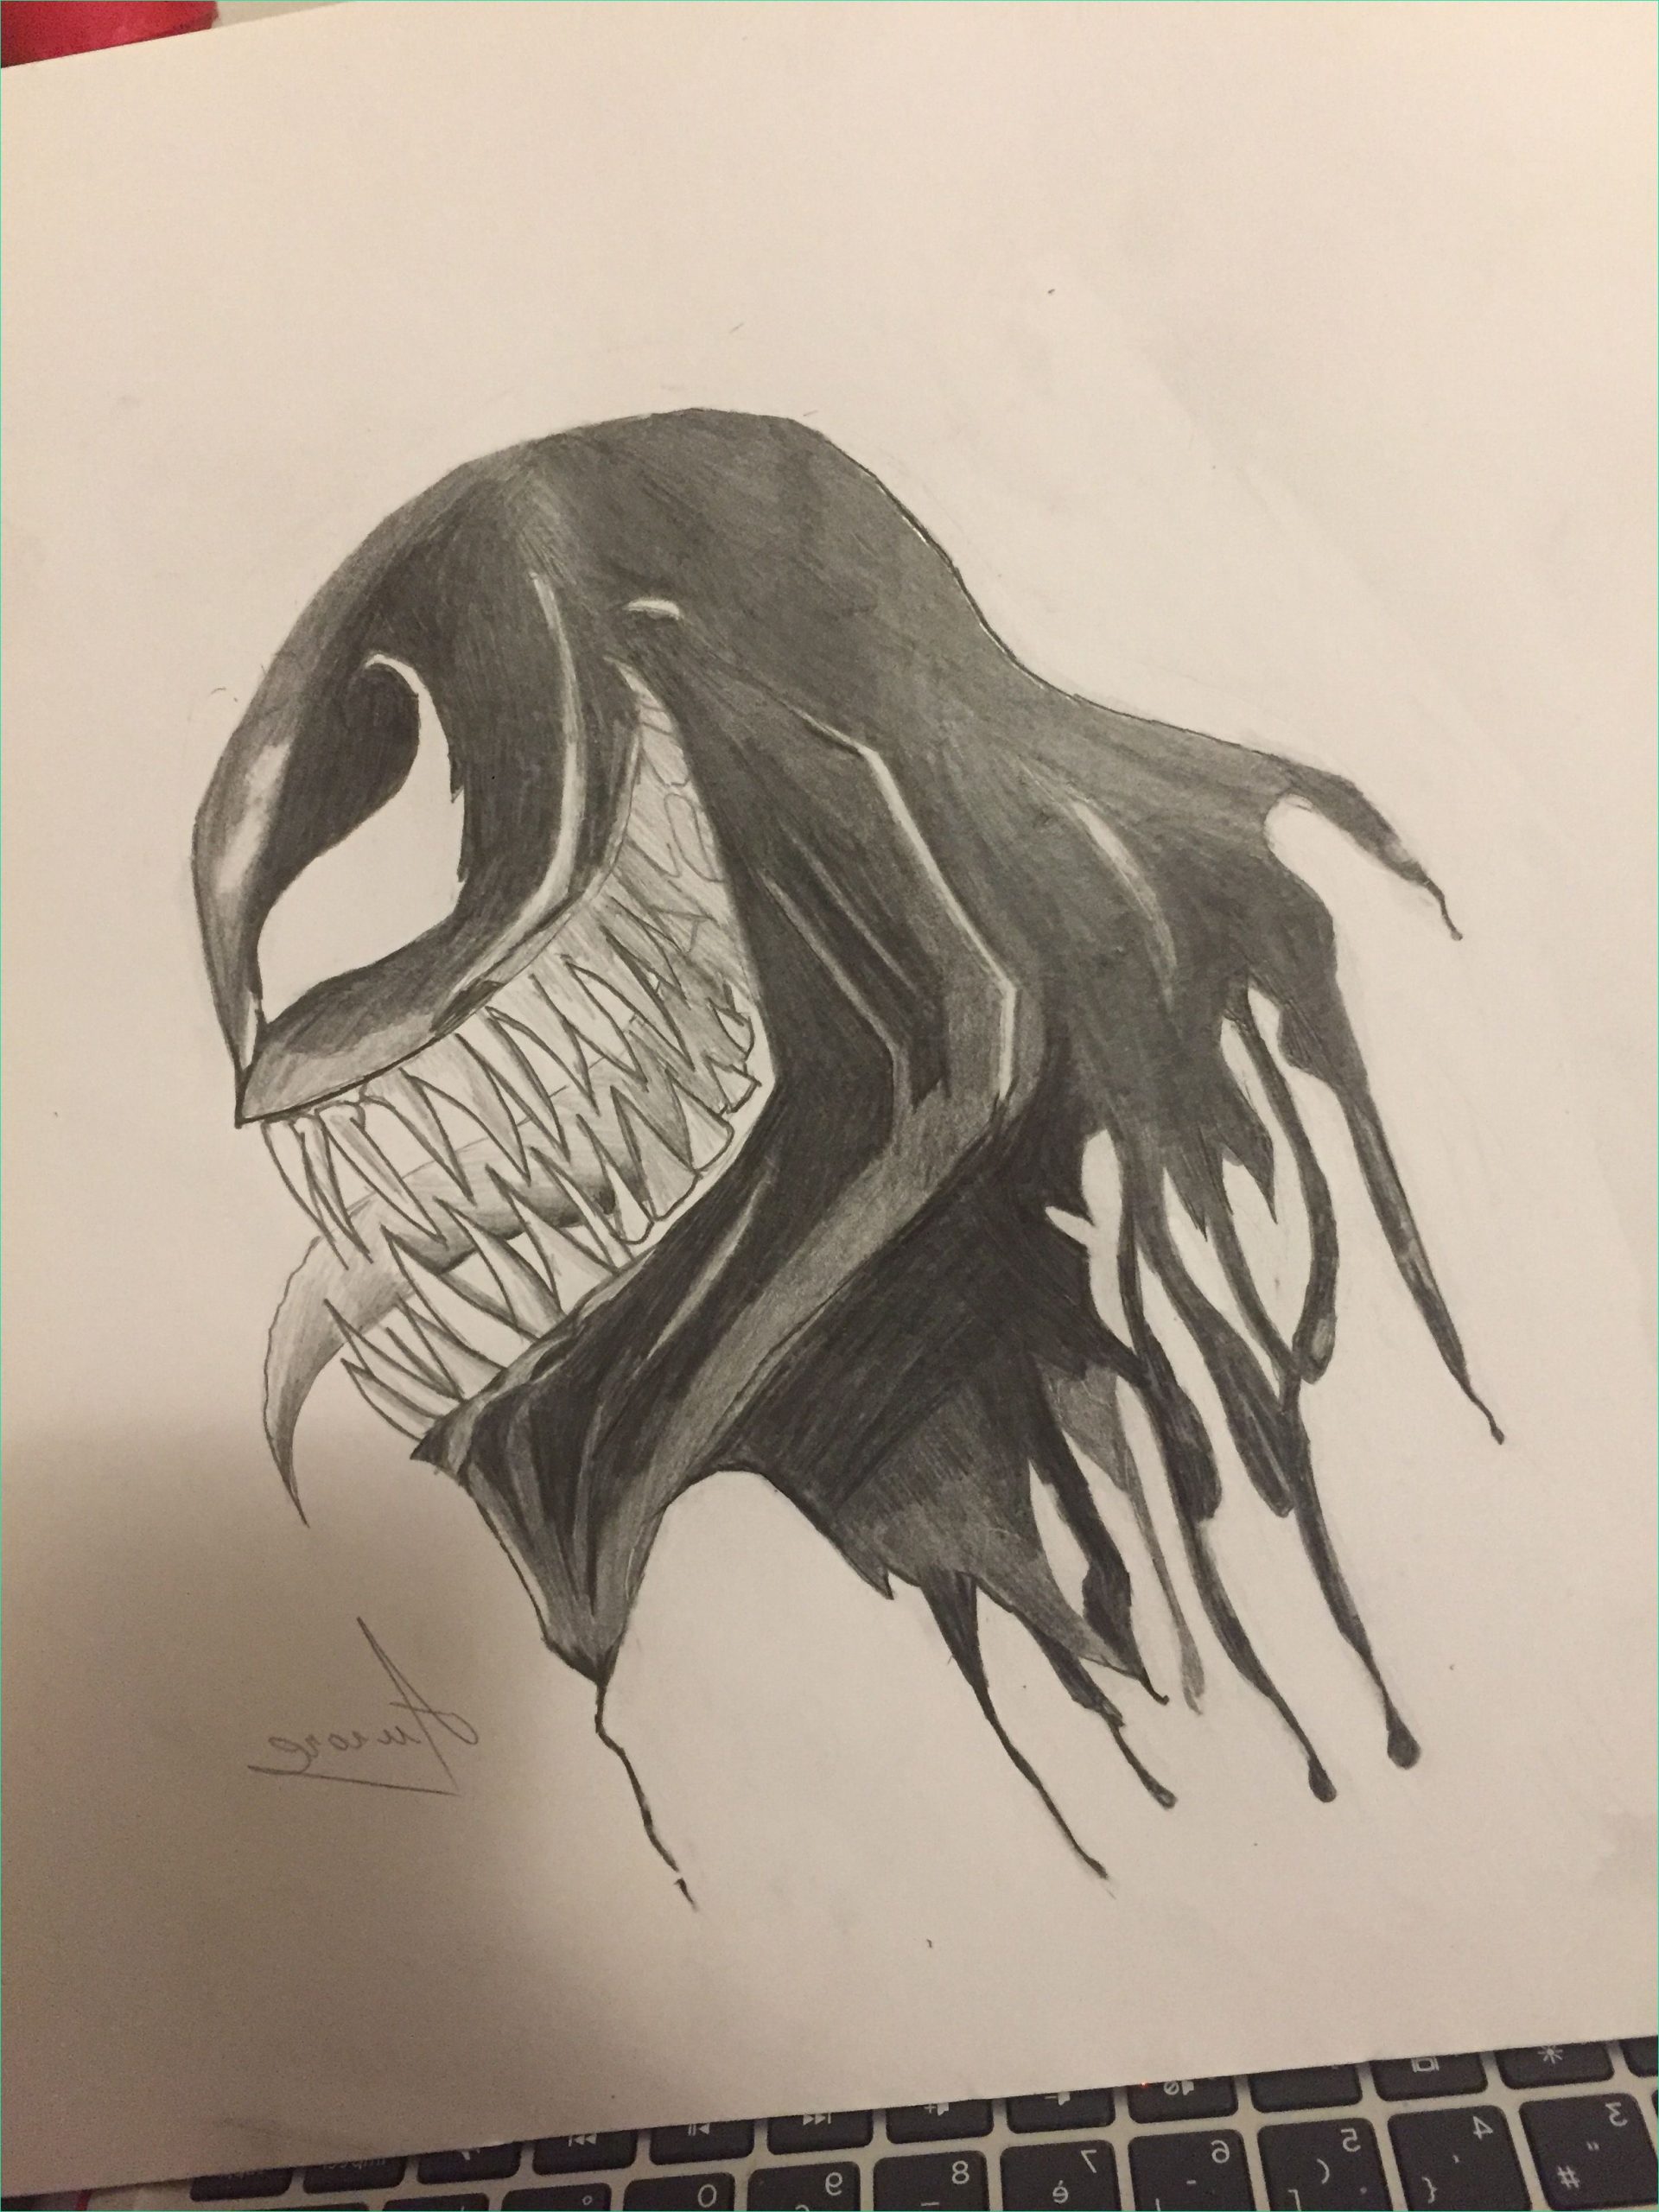 Marvel Dessin Cool Collection Dessin Venom Marvel Crayon Anti Héros Art Arts Black